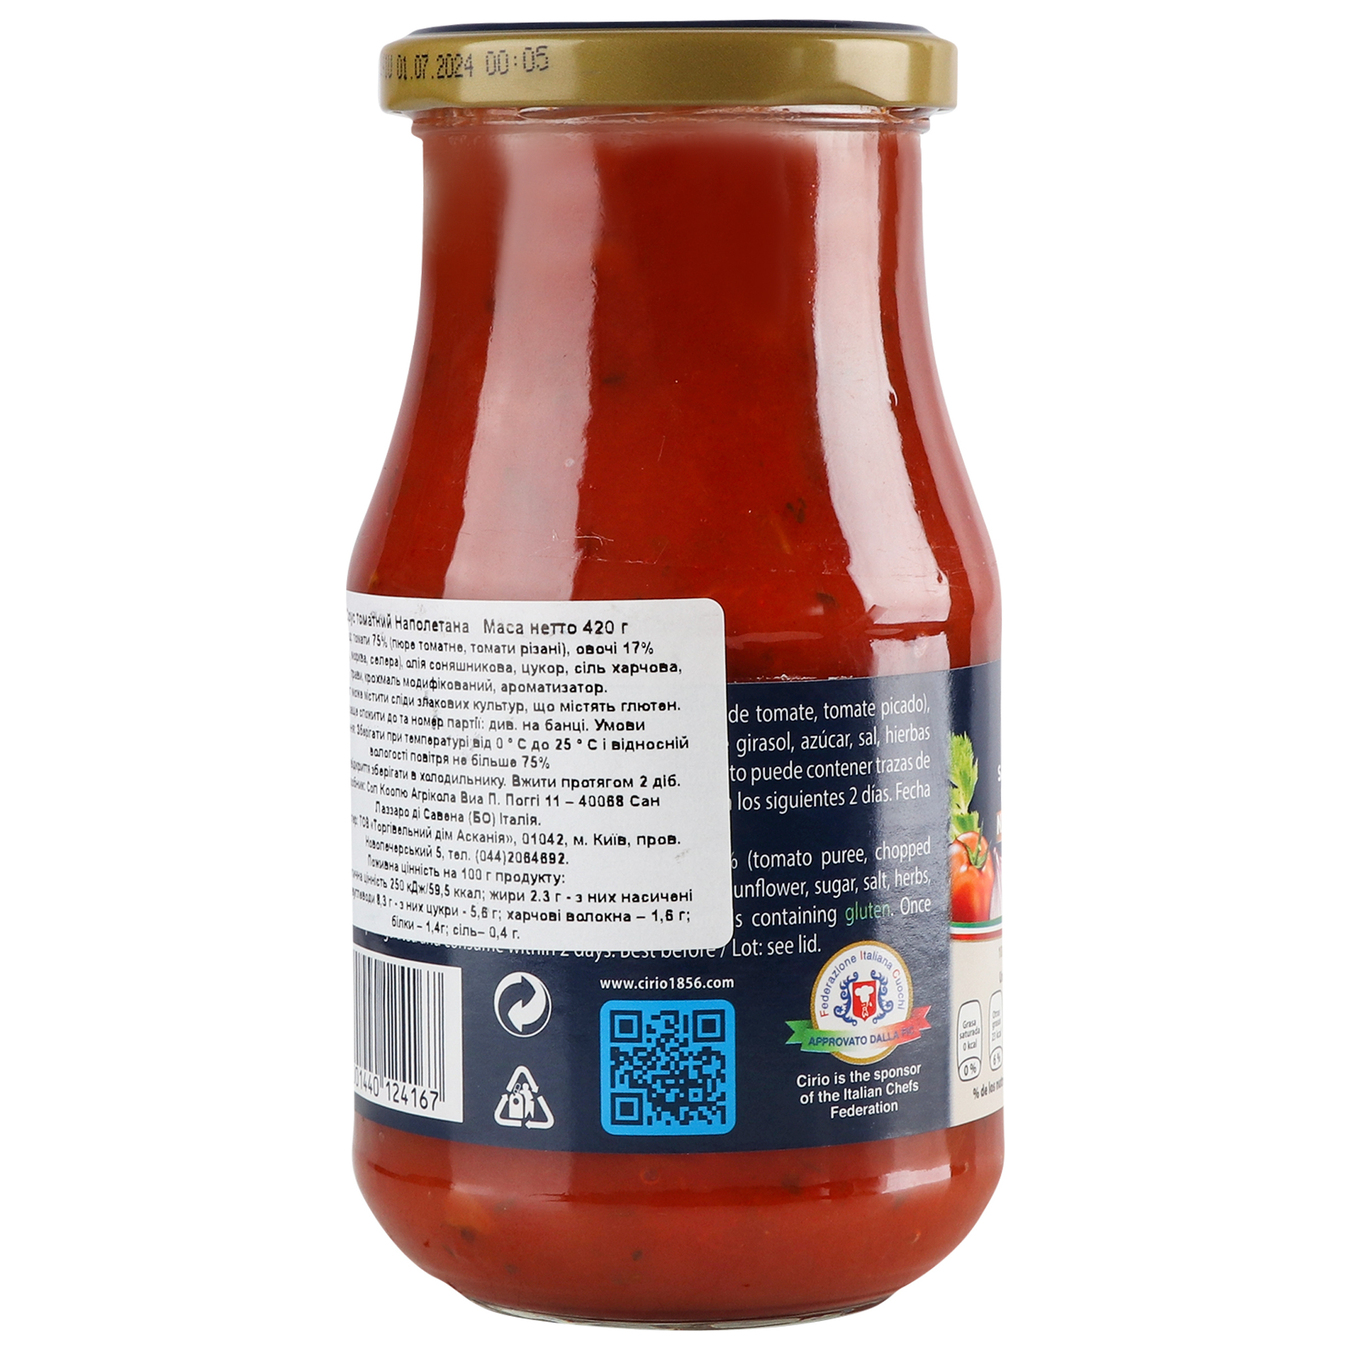 Cirio Napoletana tomato sauce 420g 4